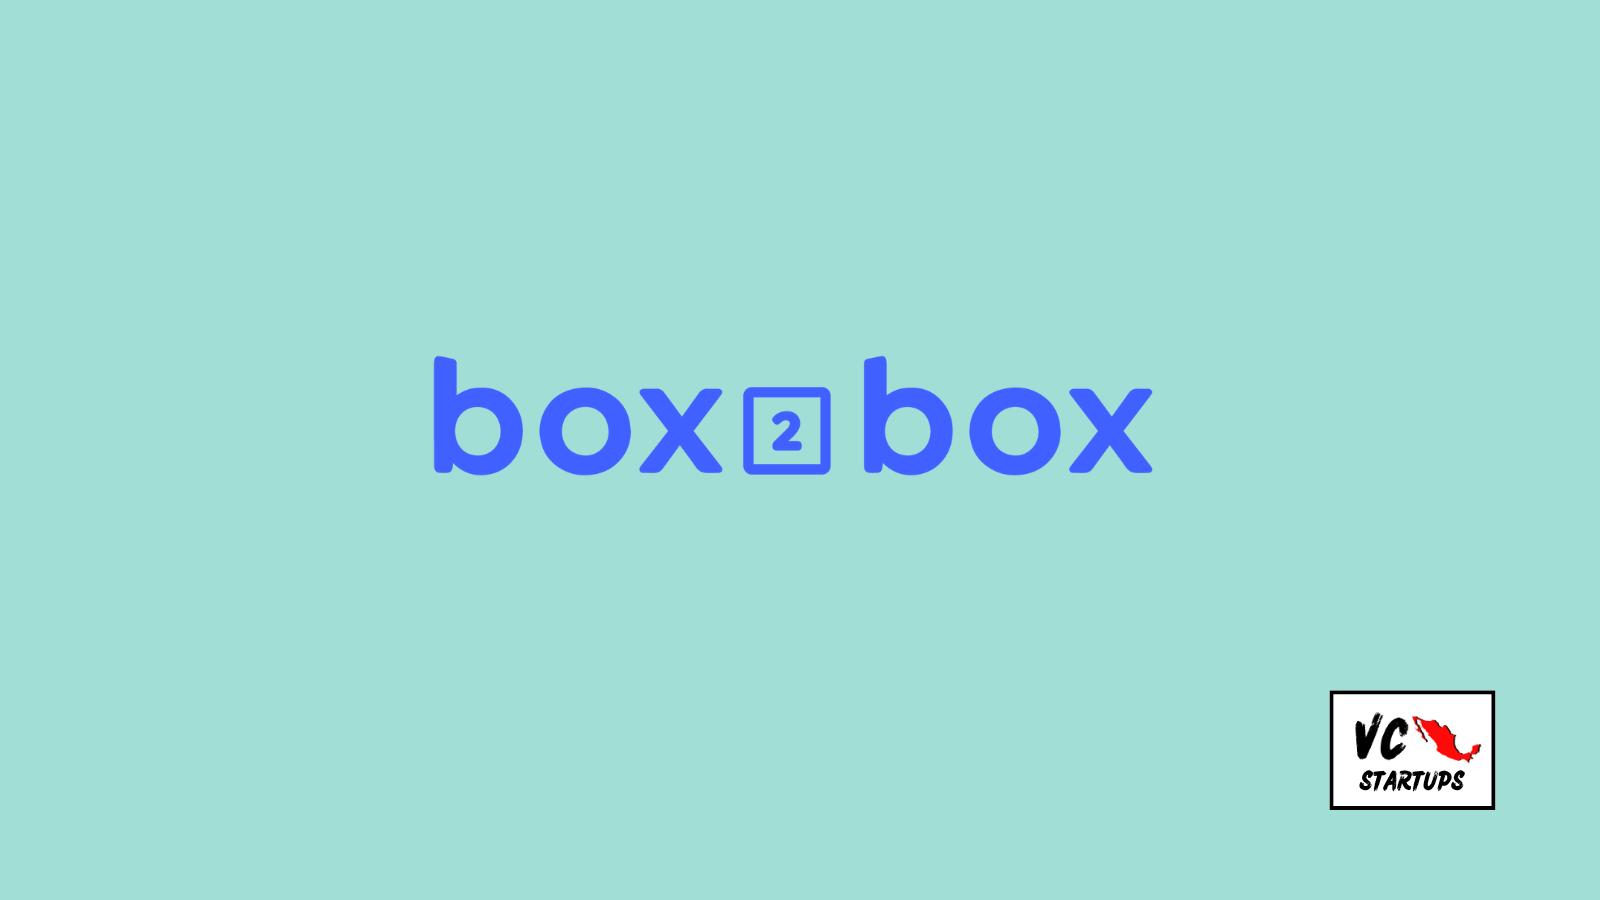 Startup Mx: box2box